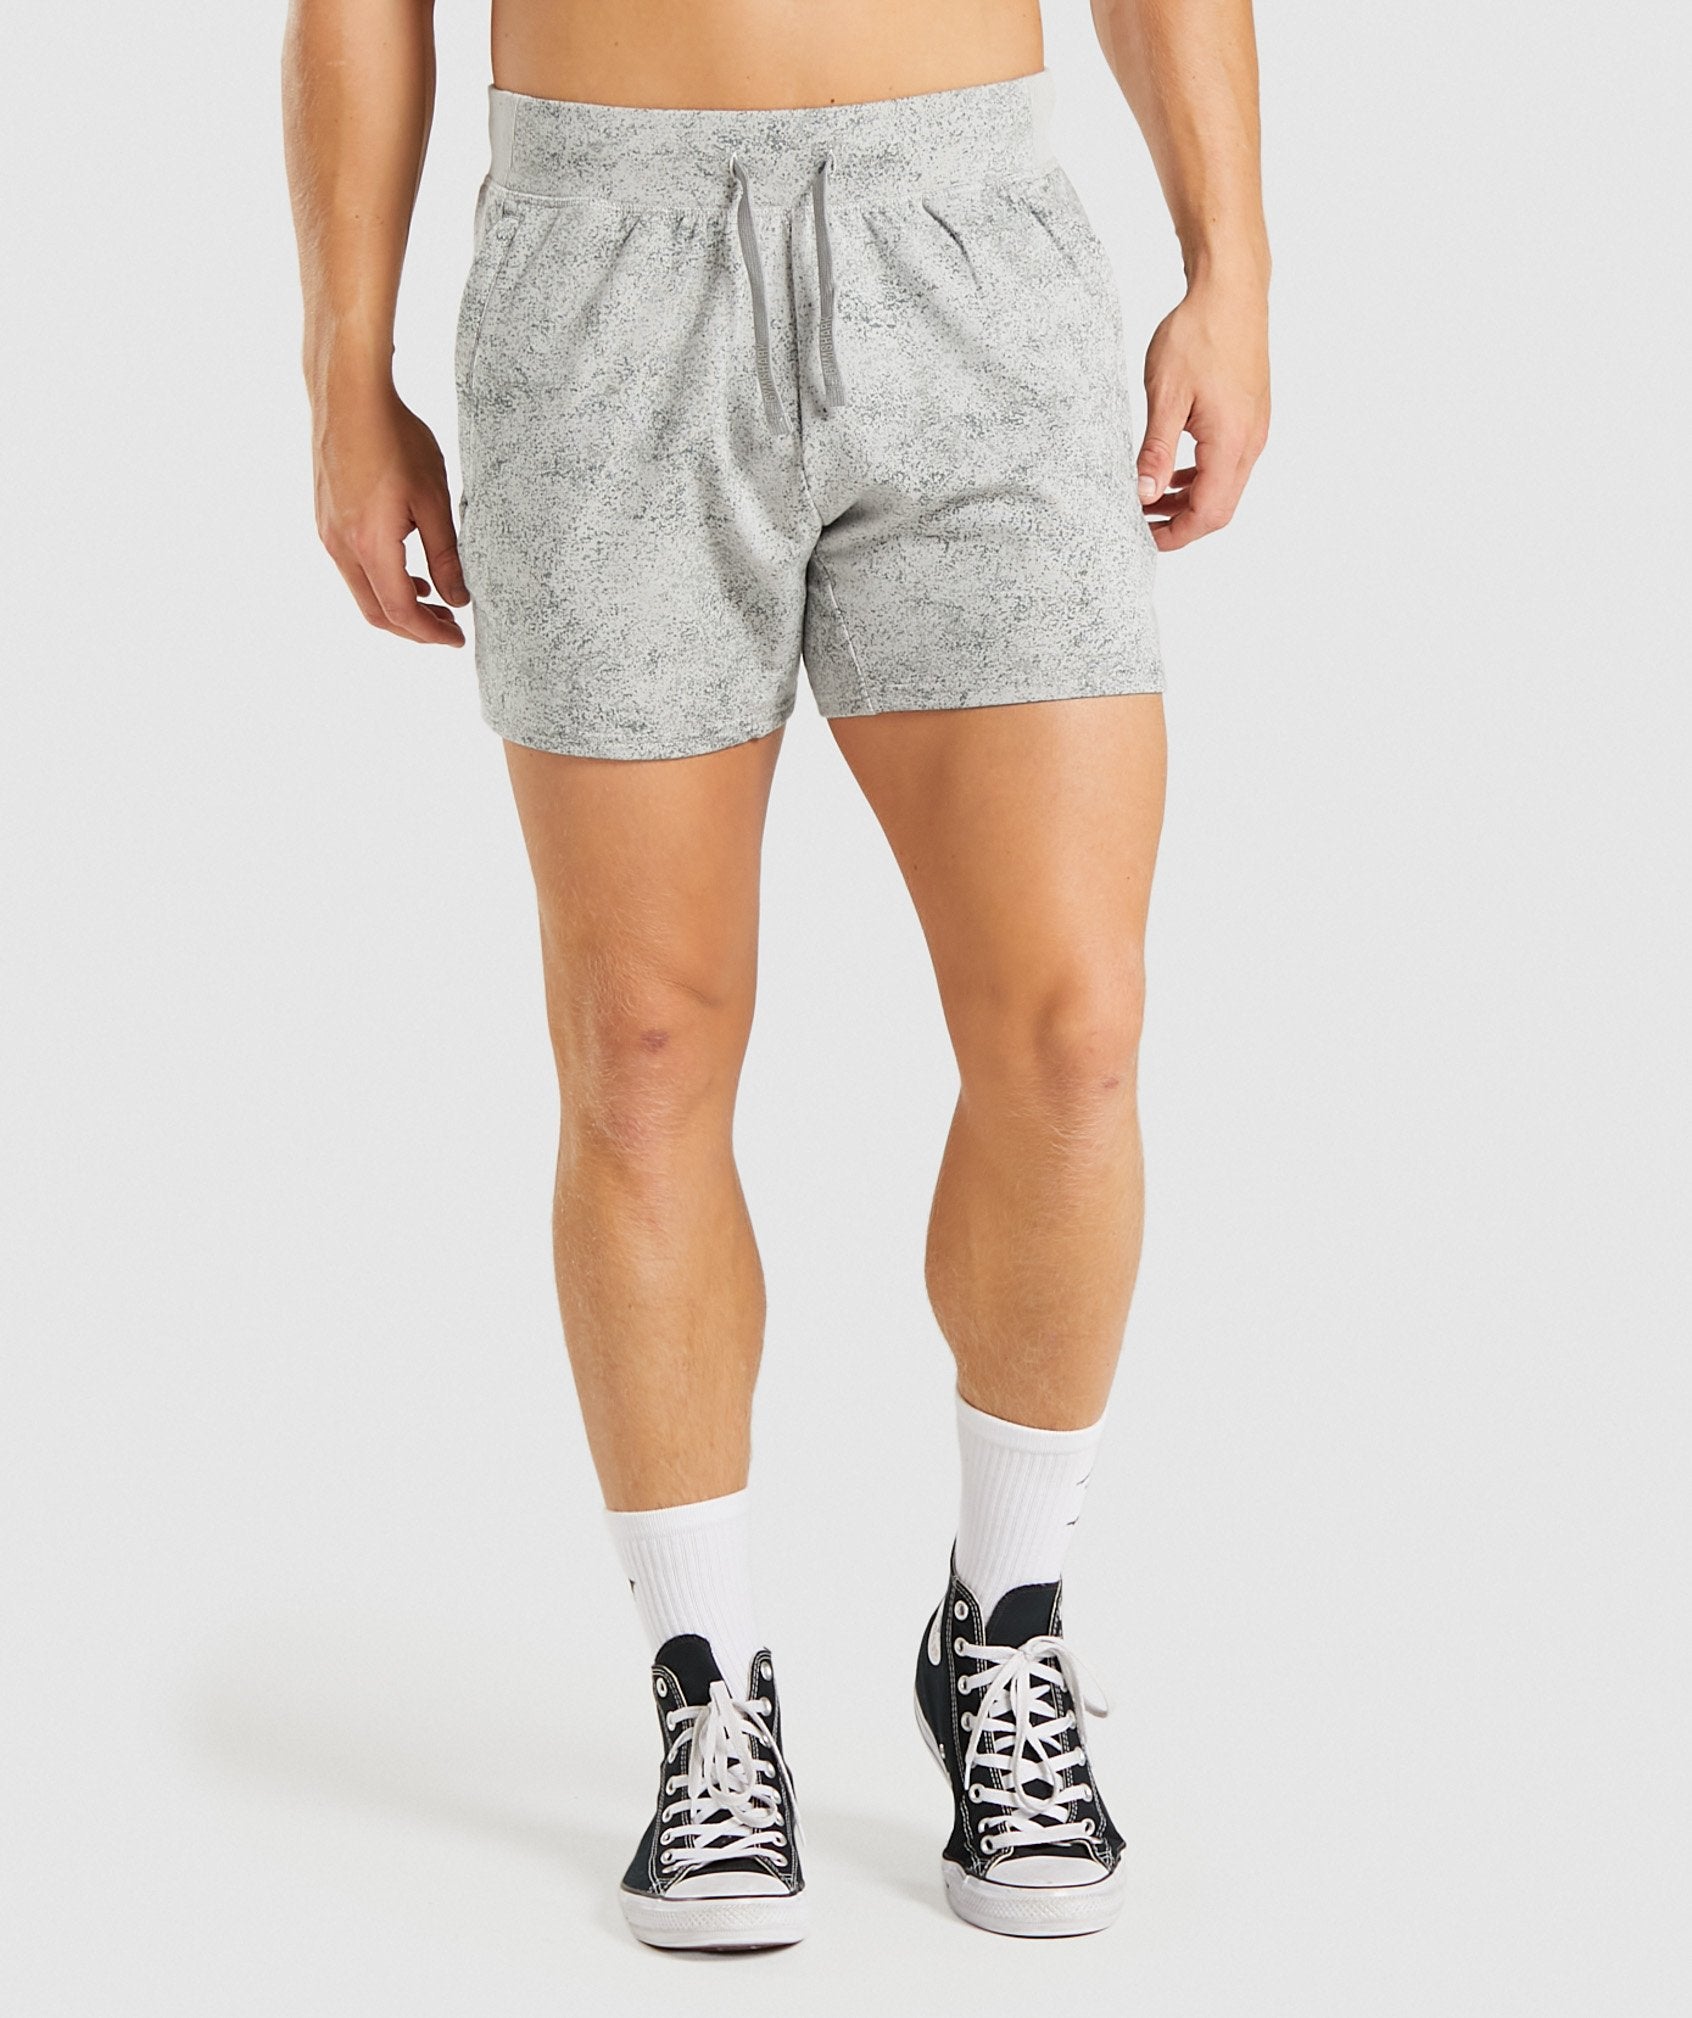 Chalk 5" Quad Shorts in Light Grey Print - view 1